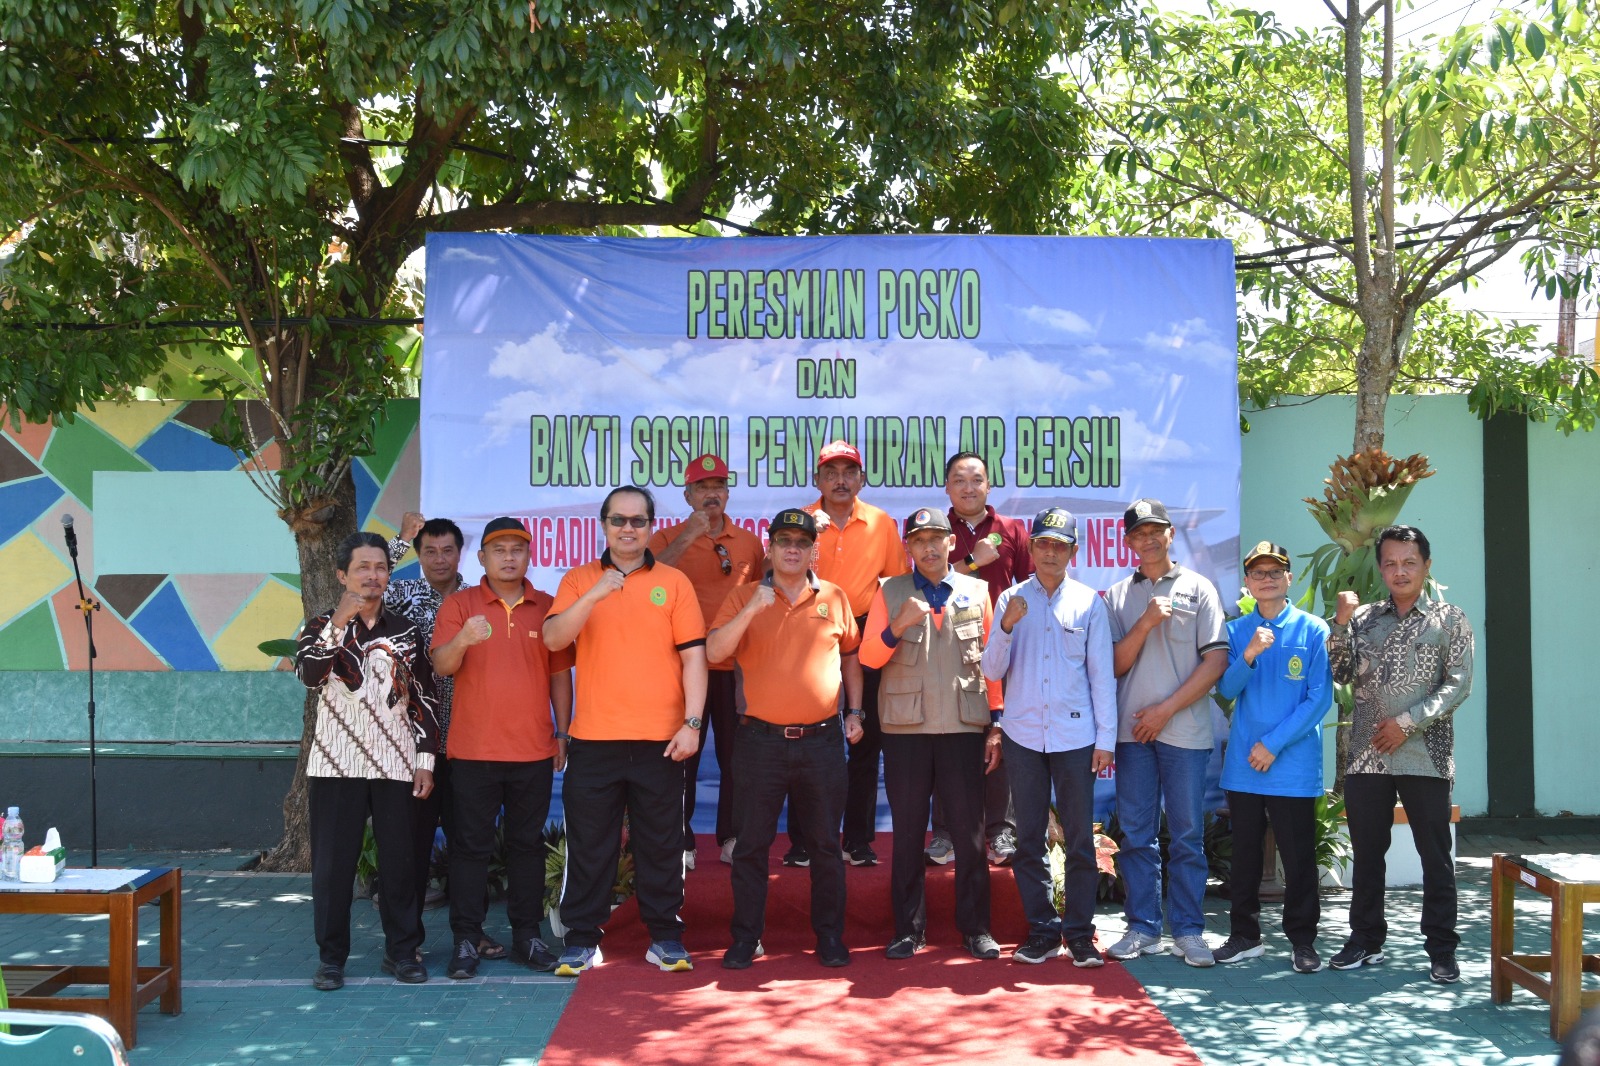 Hakim Pengadilan Negeri Yogyakarta Menghadiri Peresmian Posko dan Baksos Penyaluran Air Bersih Kabupaten Gunung Kidul